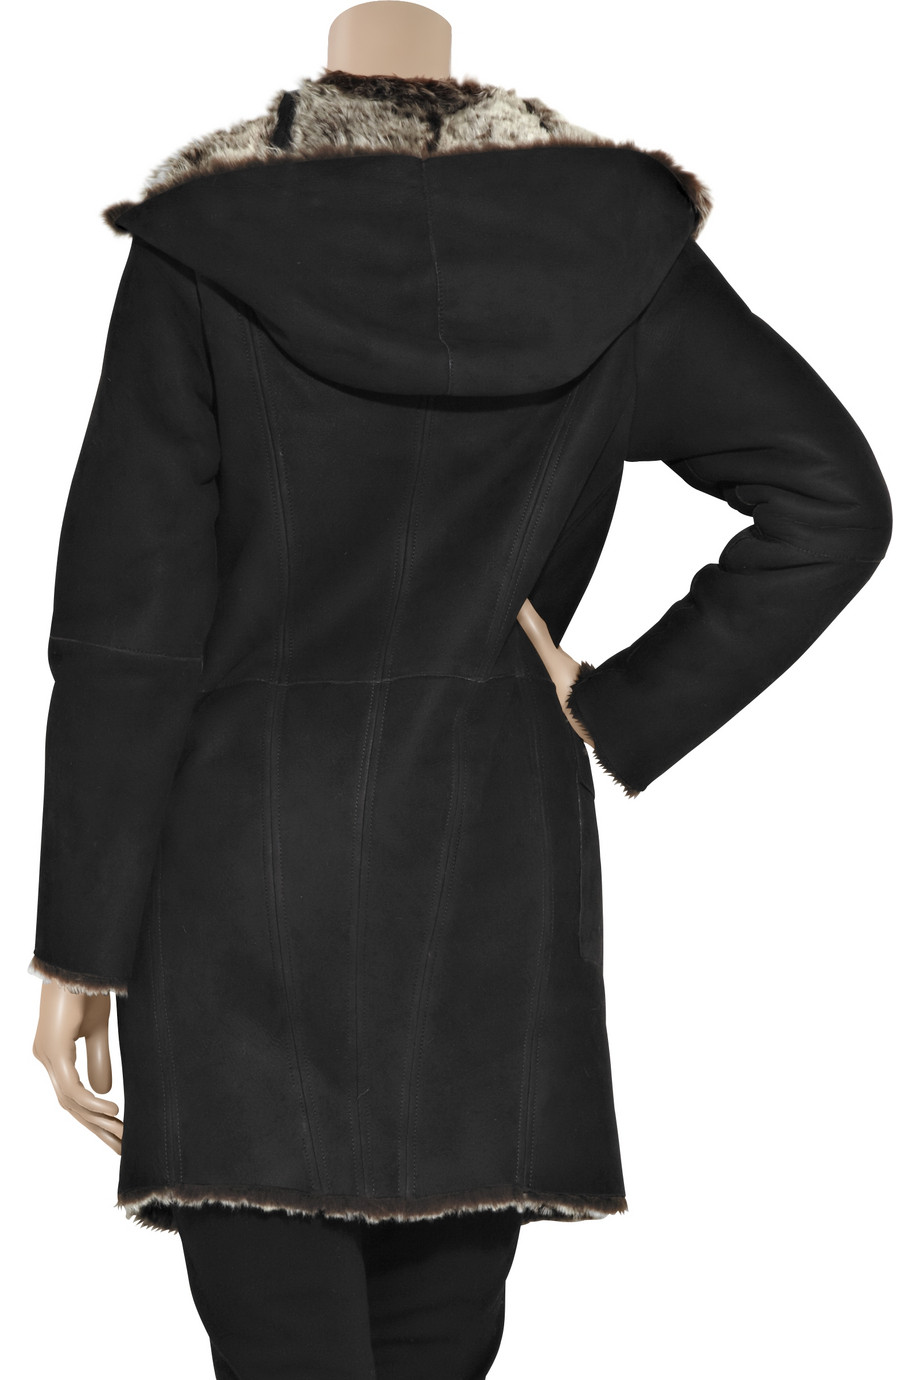 Donna karan new york Hooded Shearling Coat in Black | Lyst